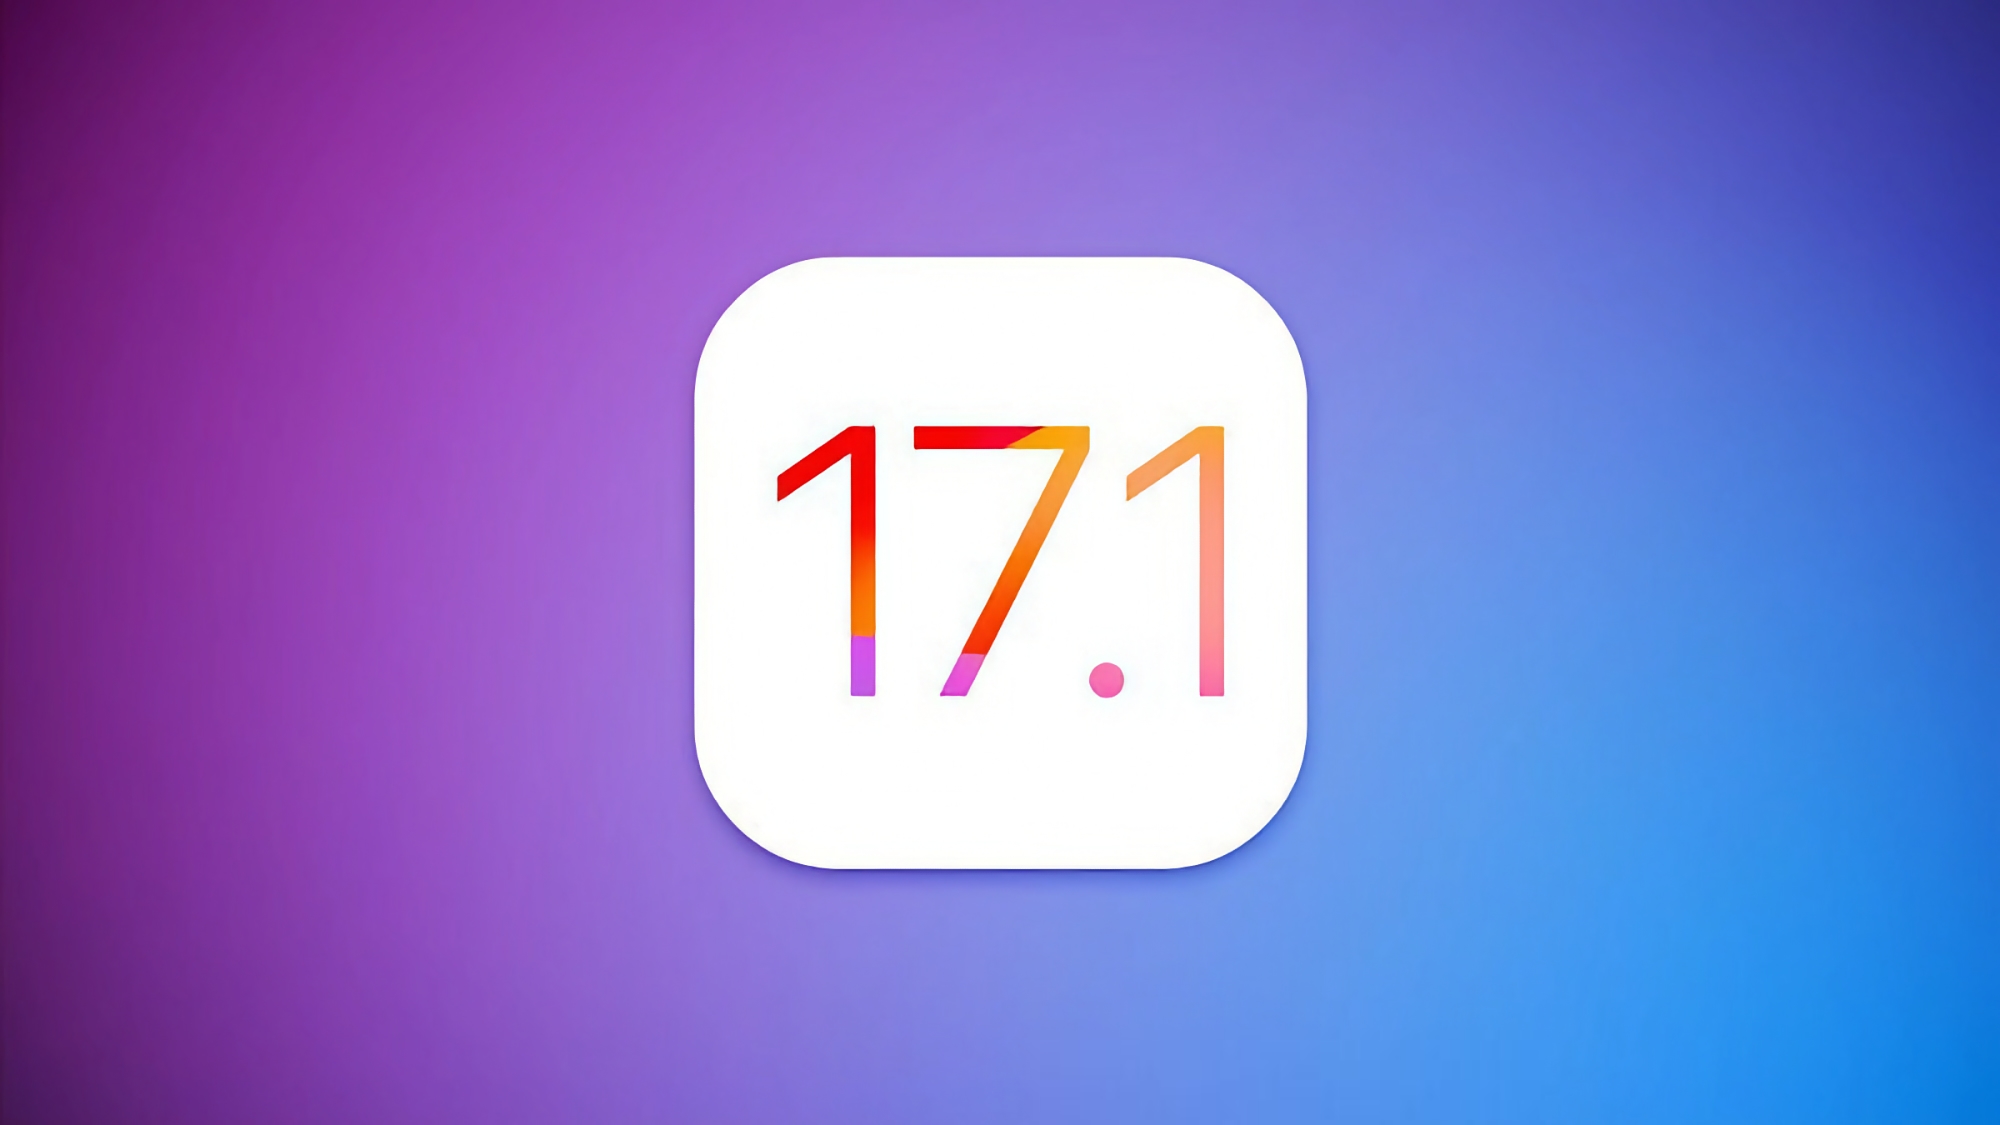 Apple has released the third beta of iOS 17.1